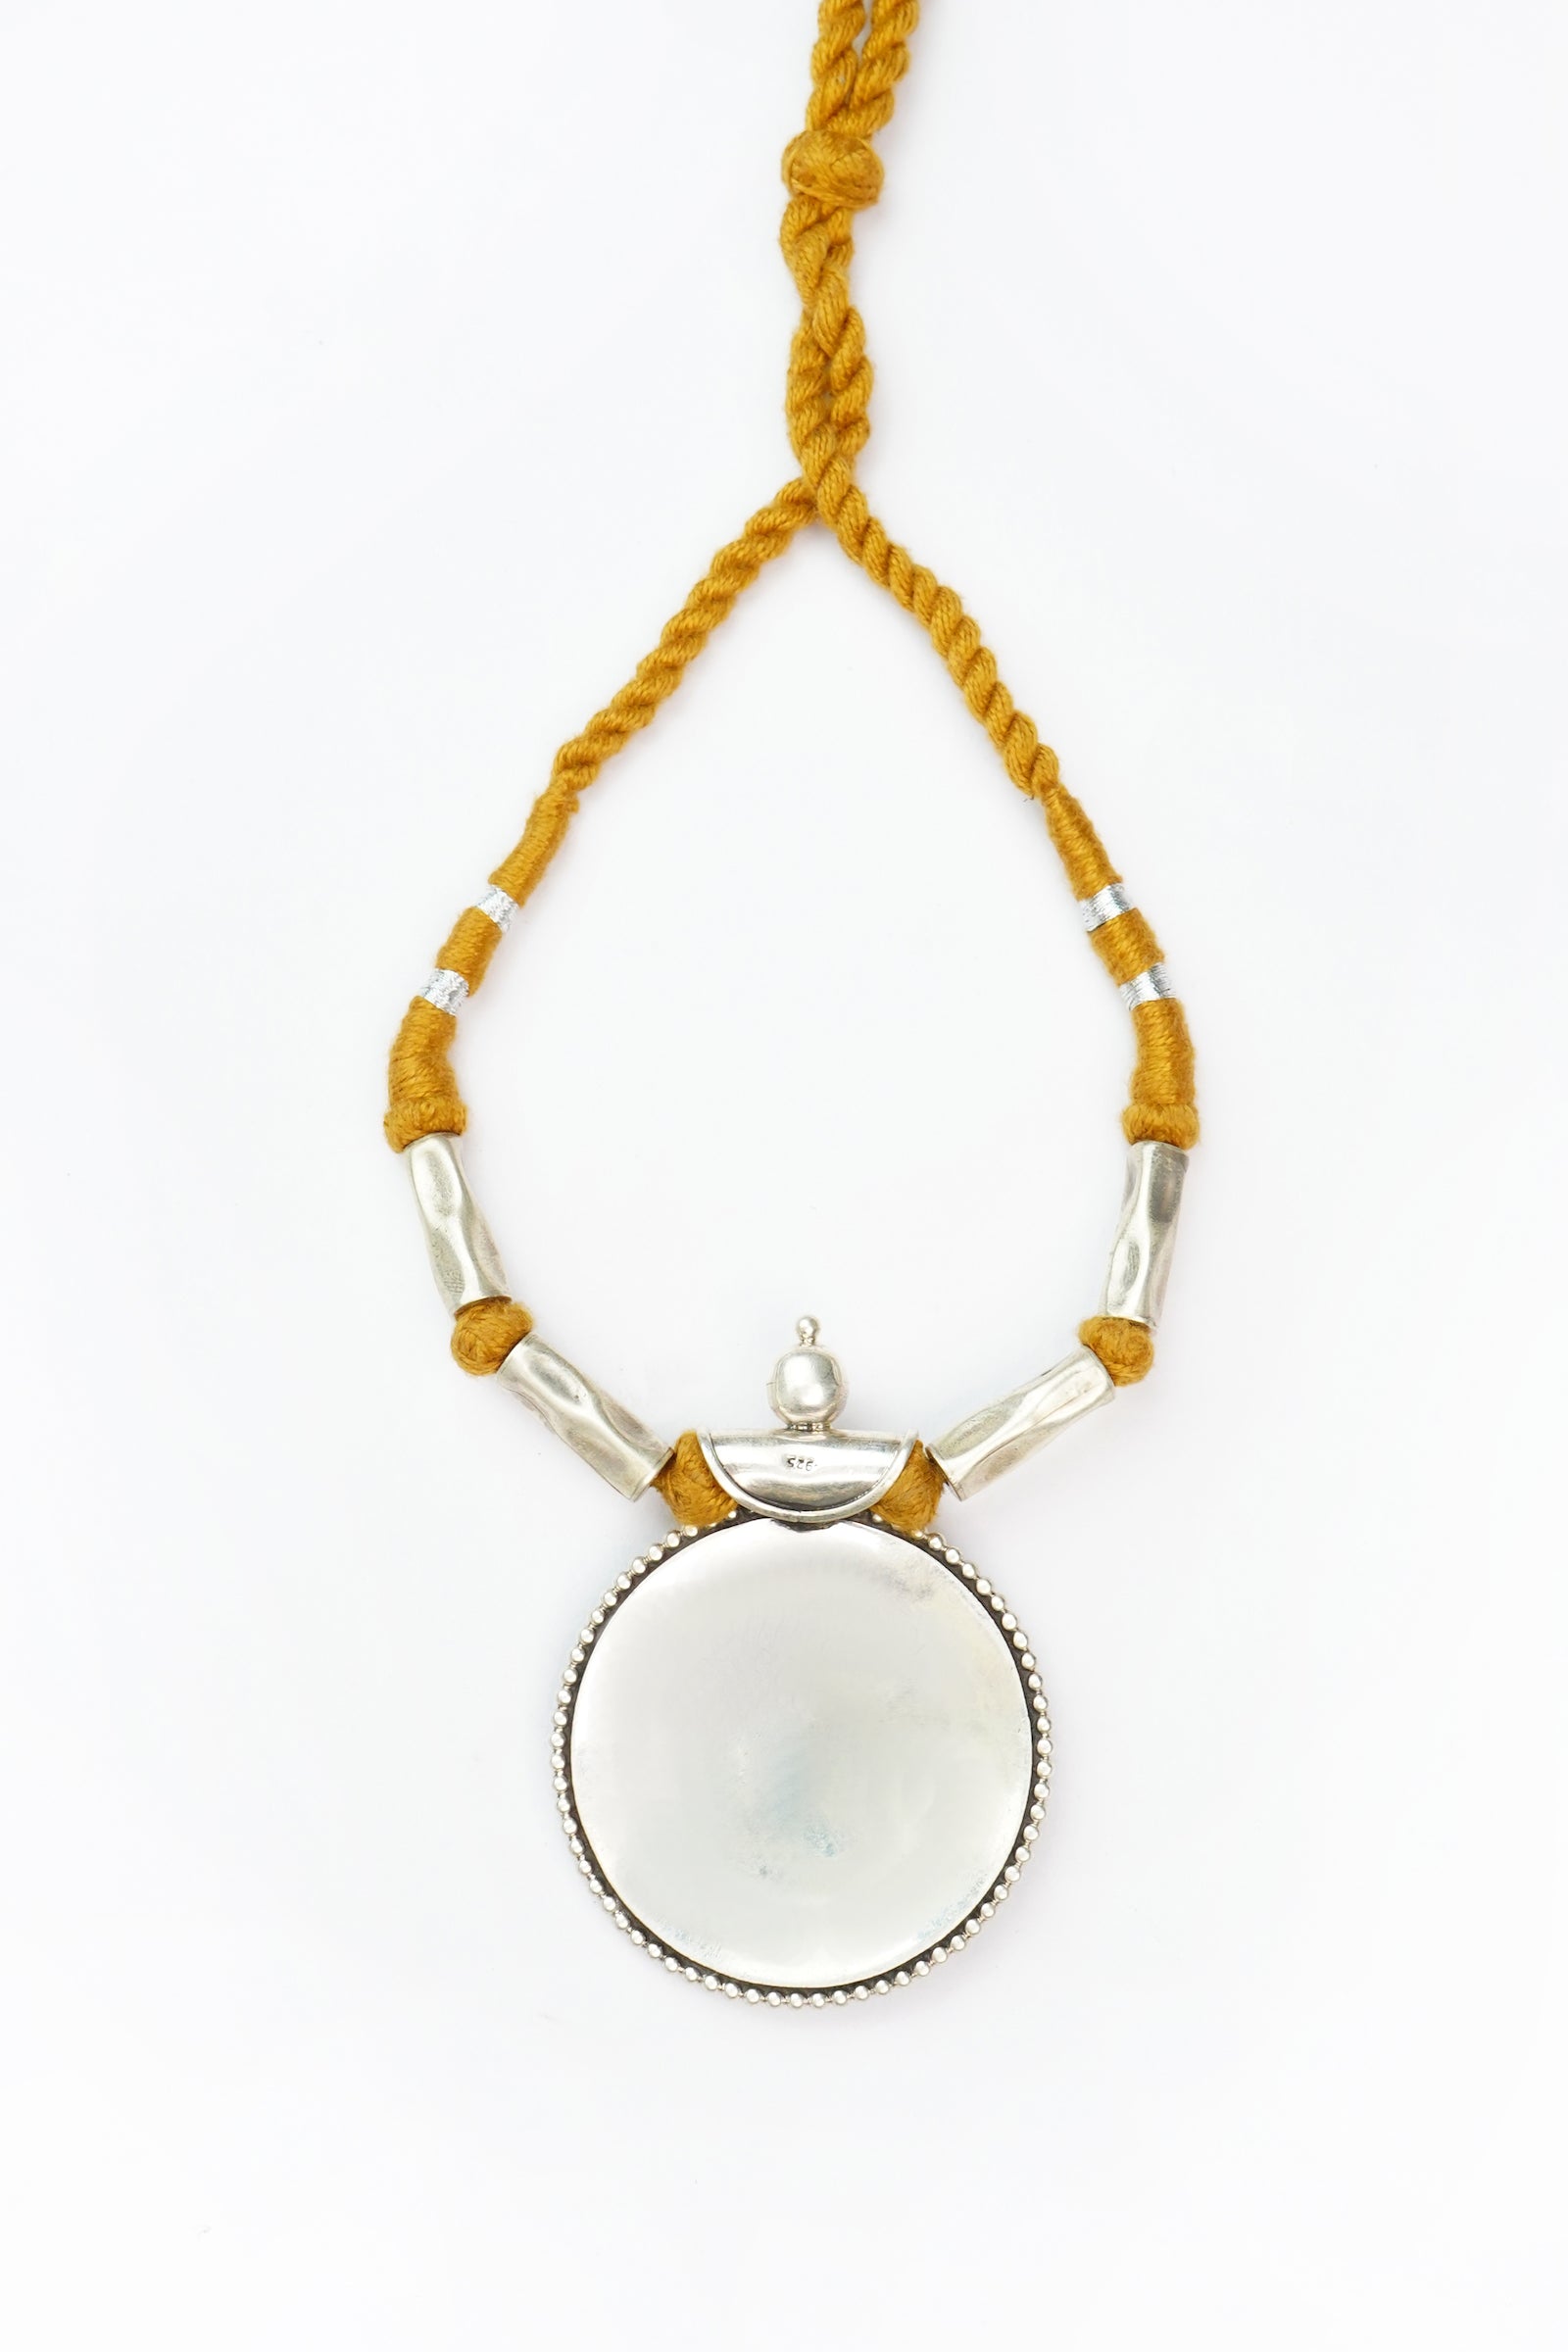 Silver Rawa Necklace with Brown Patwa Thread and Signature Kundan Motif - Neeta Boochra Jewellery